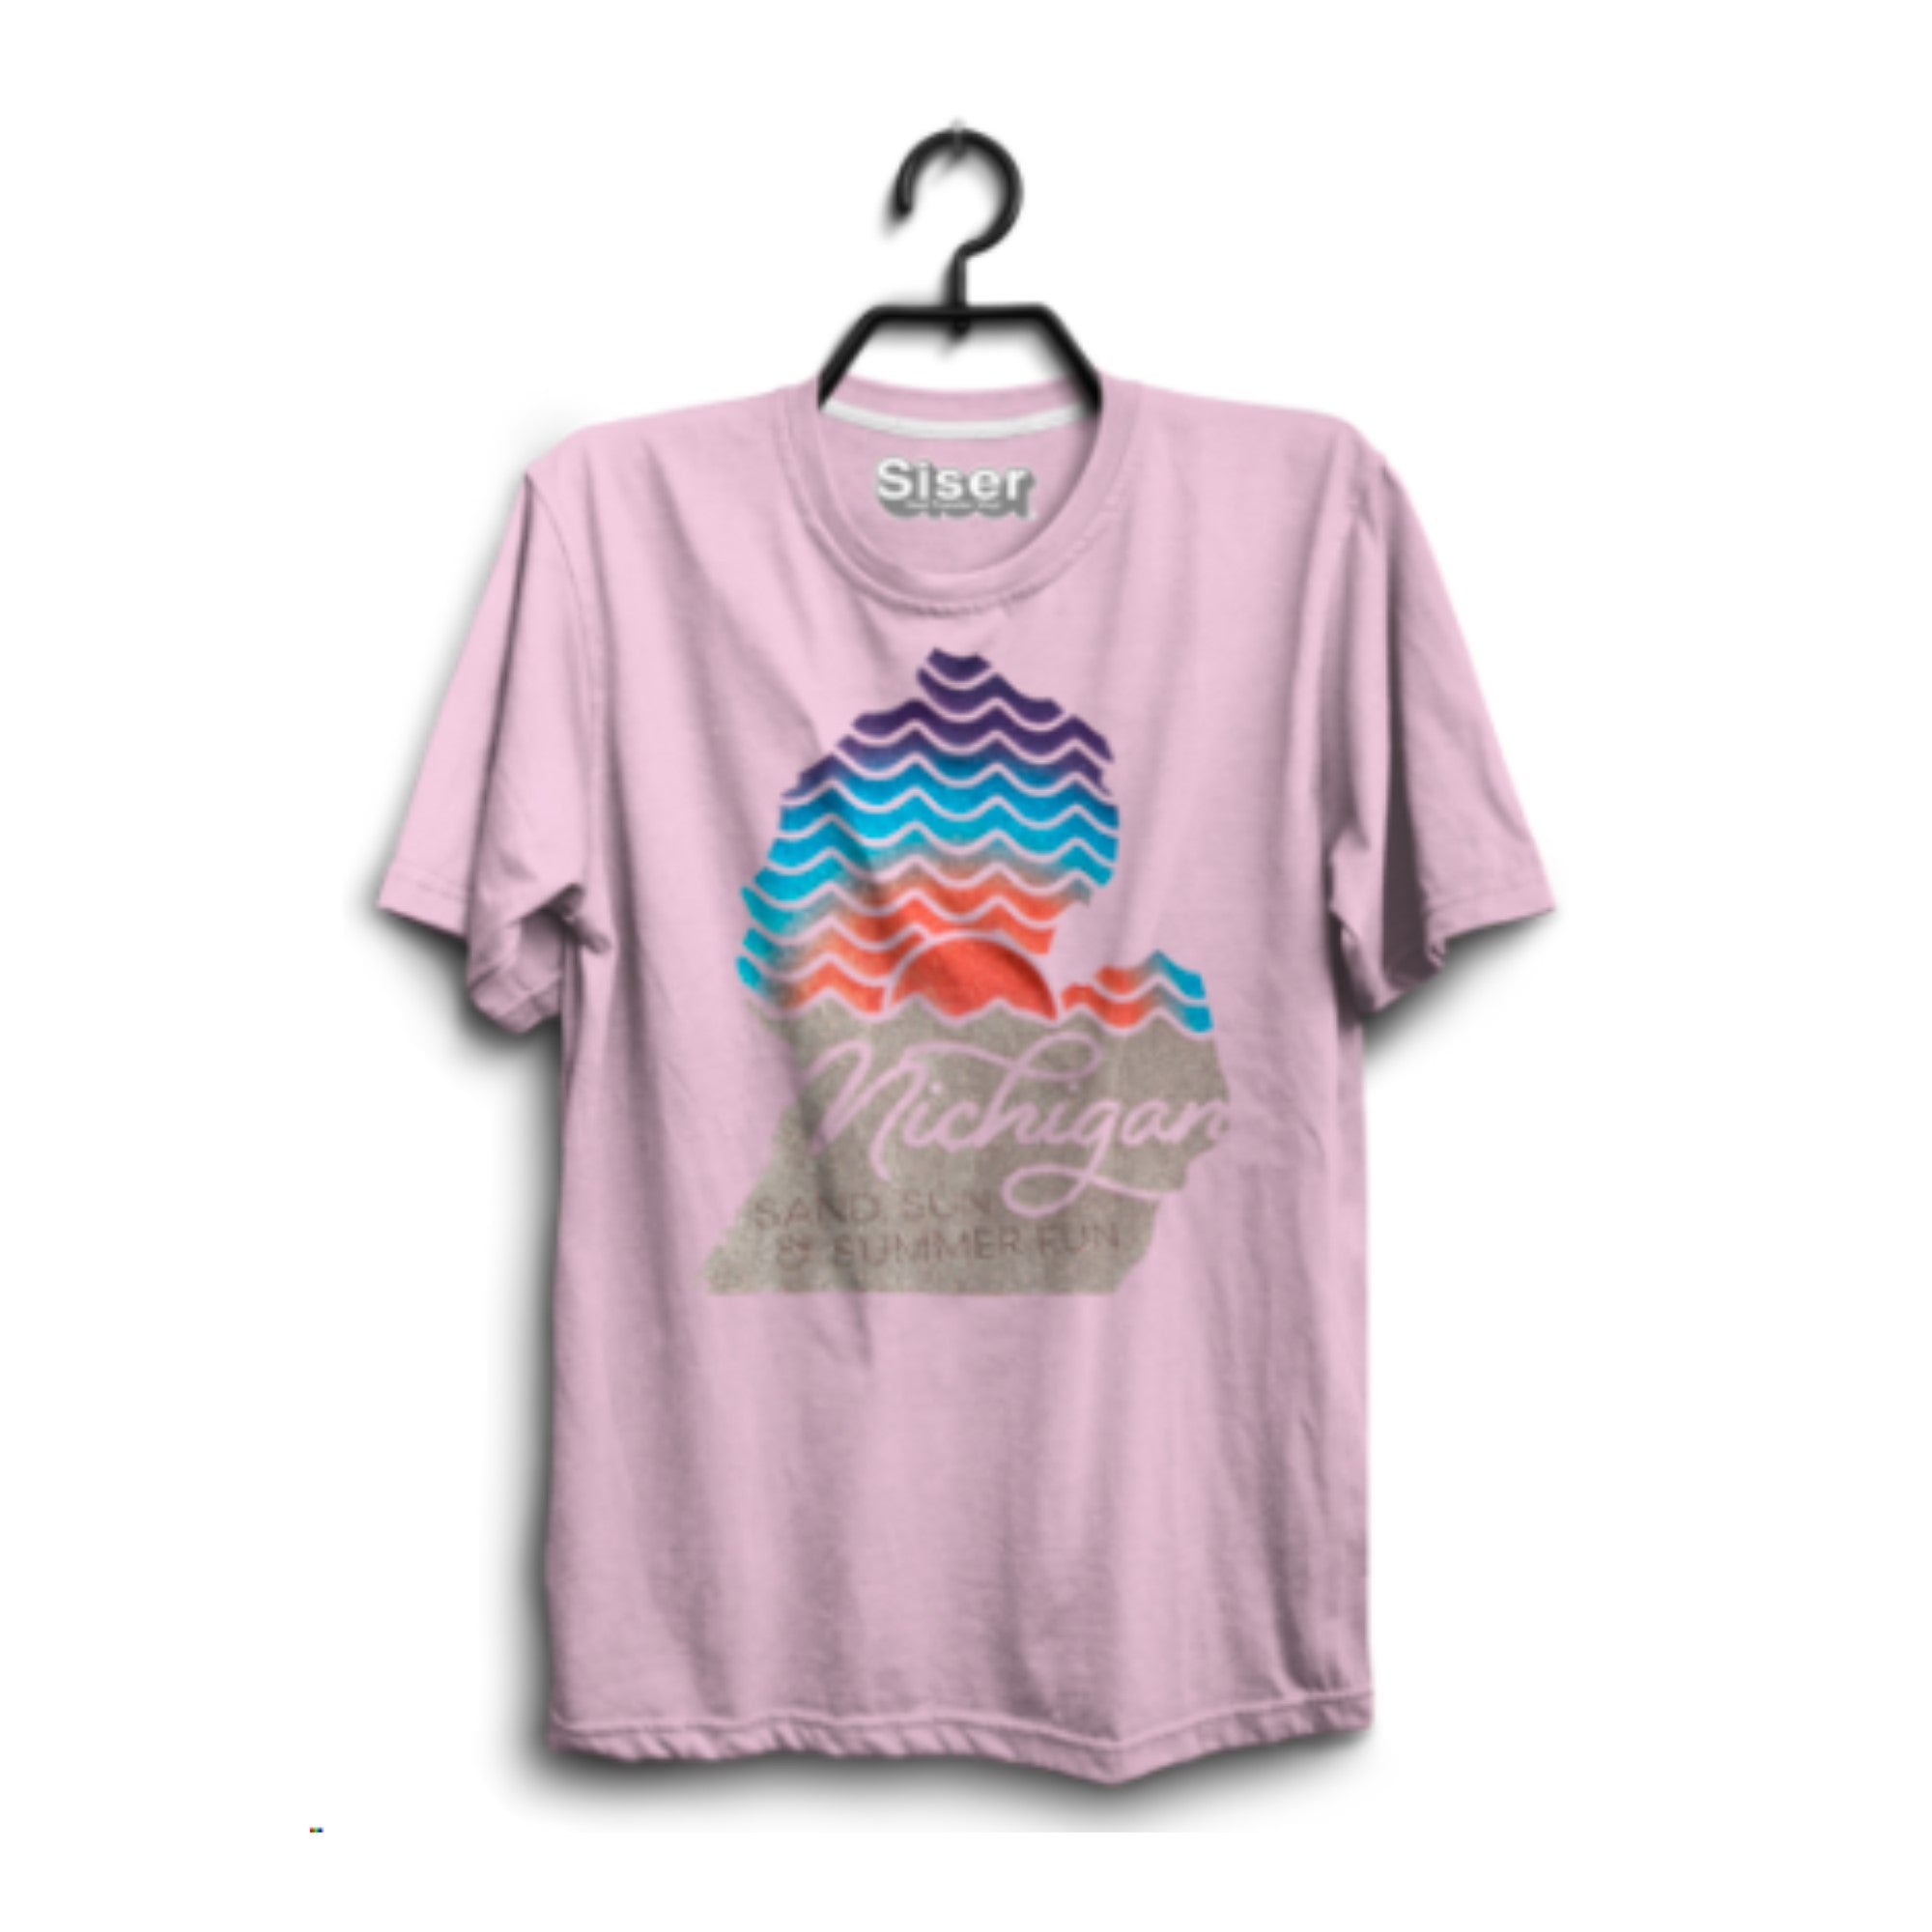 20 Heat Transfer Vinyl Shirts With Cute Designs - The Crafty Blog Stalker